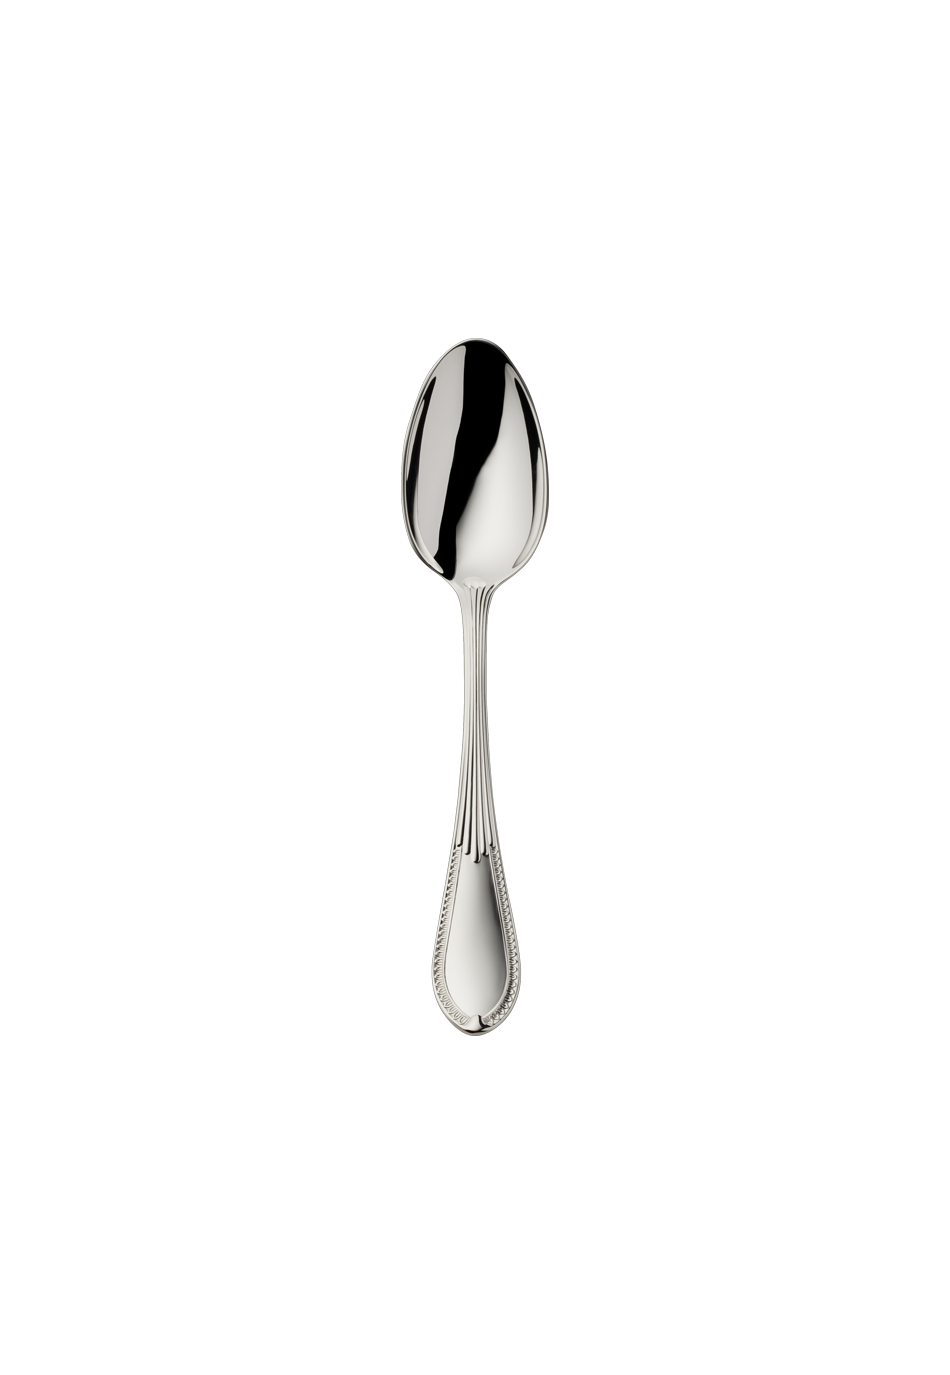 Belvedere Ice-Cream Spoon (150g massive silverplated)